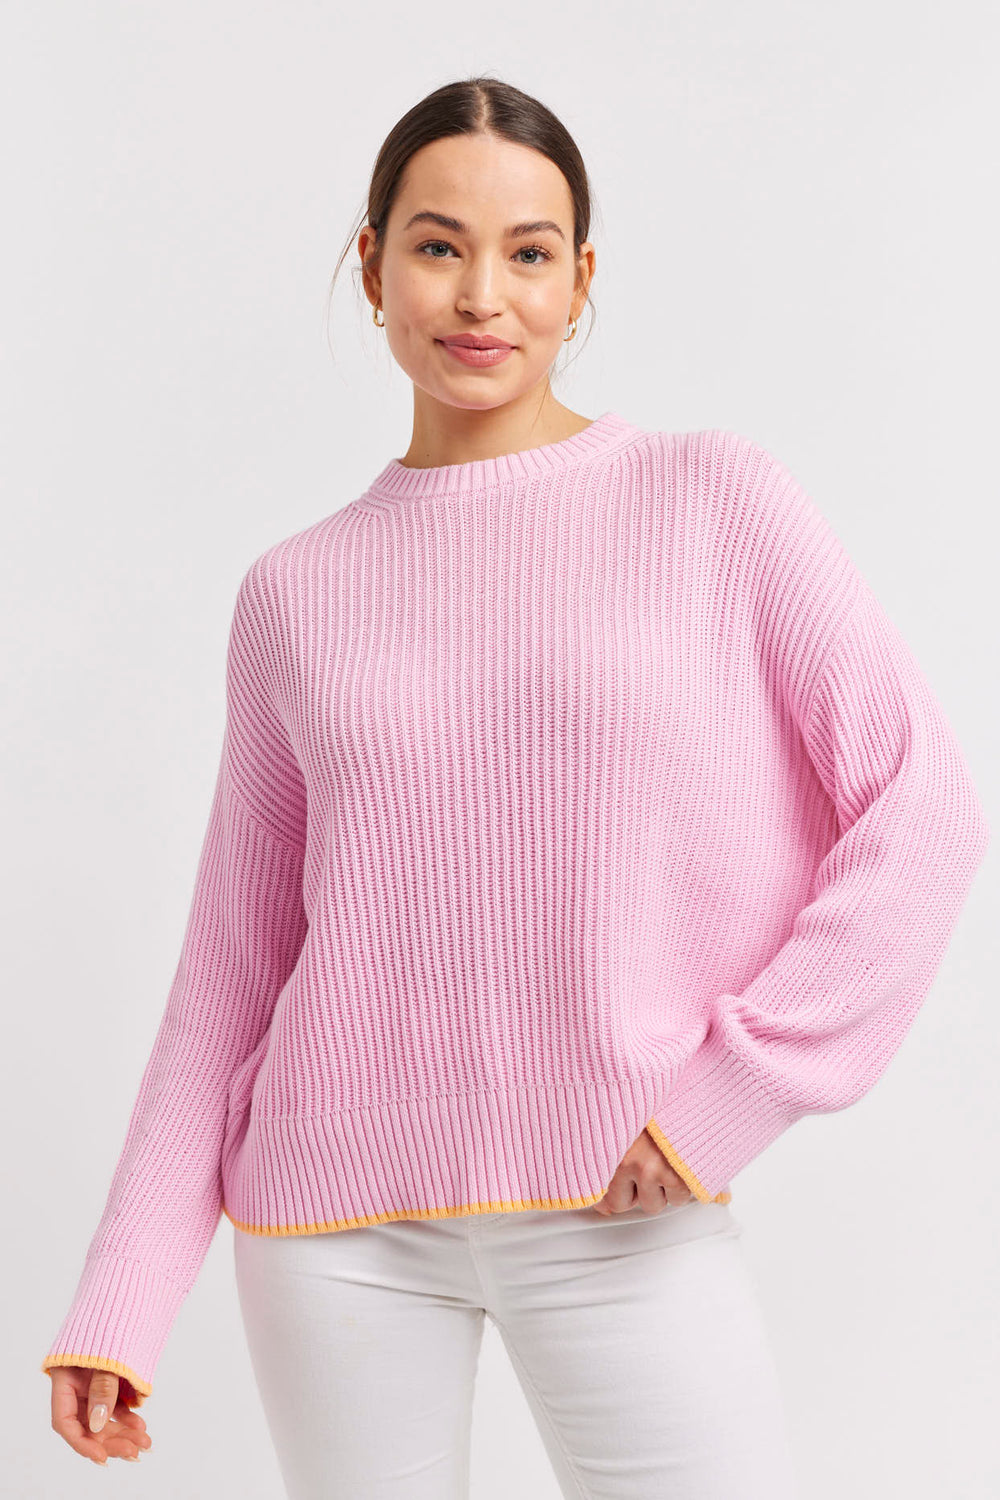 Limone Sweater - Peony knits Alessandra   